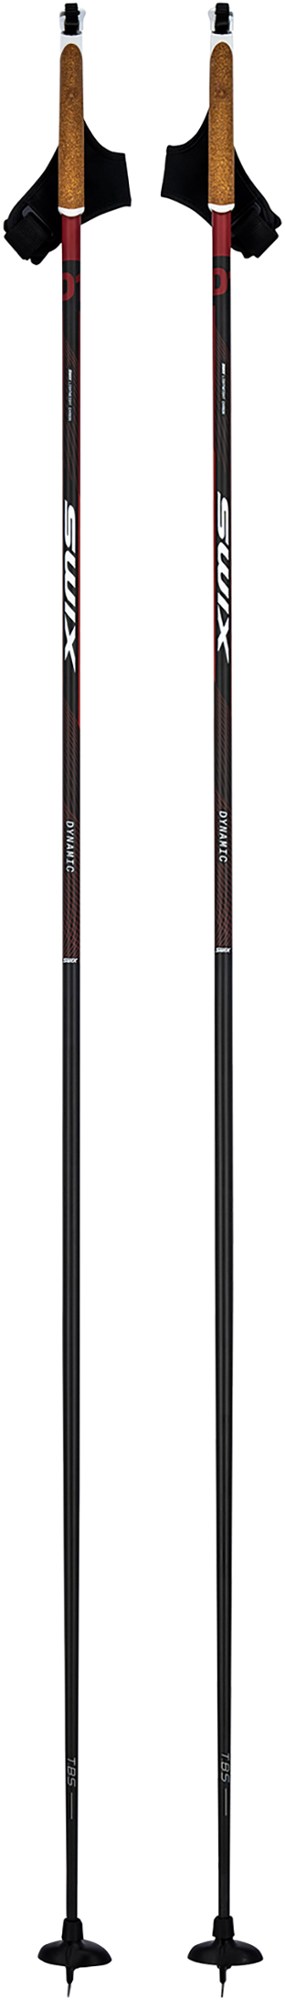 цена Палки для беговых лыж Dynamic D1 Swix, черный